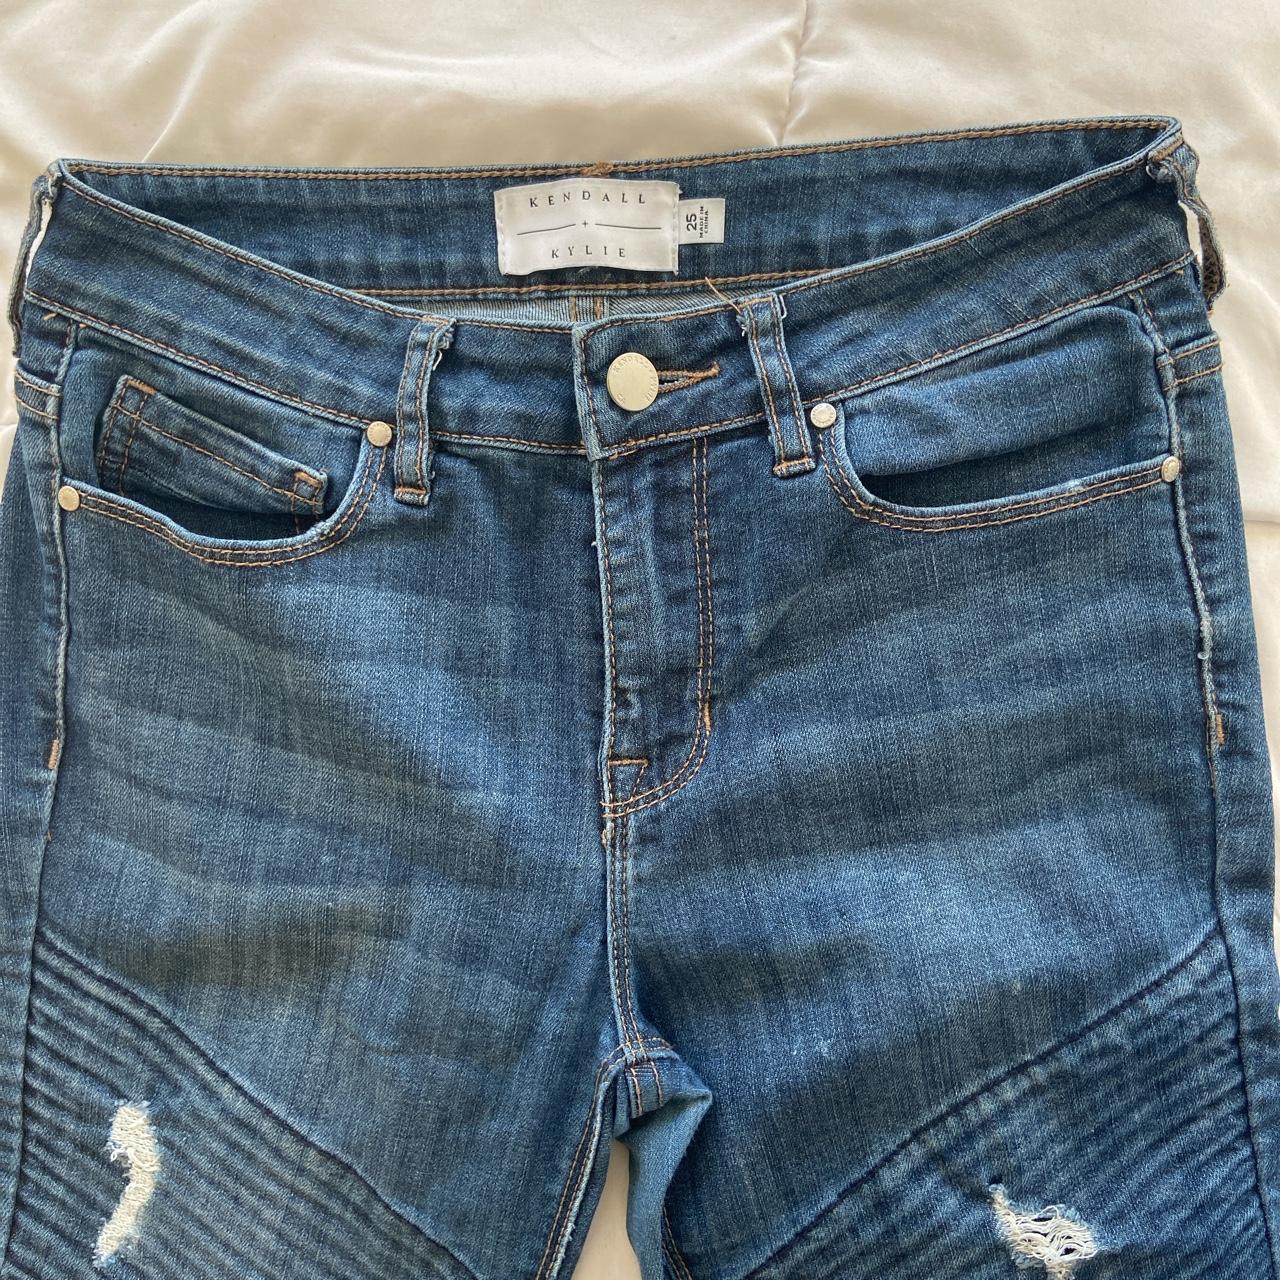 KENDALL + KYLIE Women's Jeans | Depop